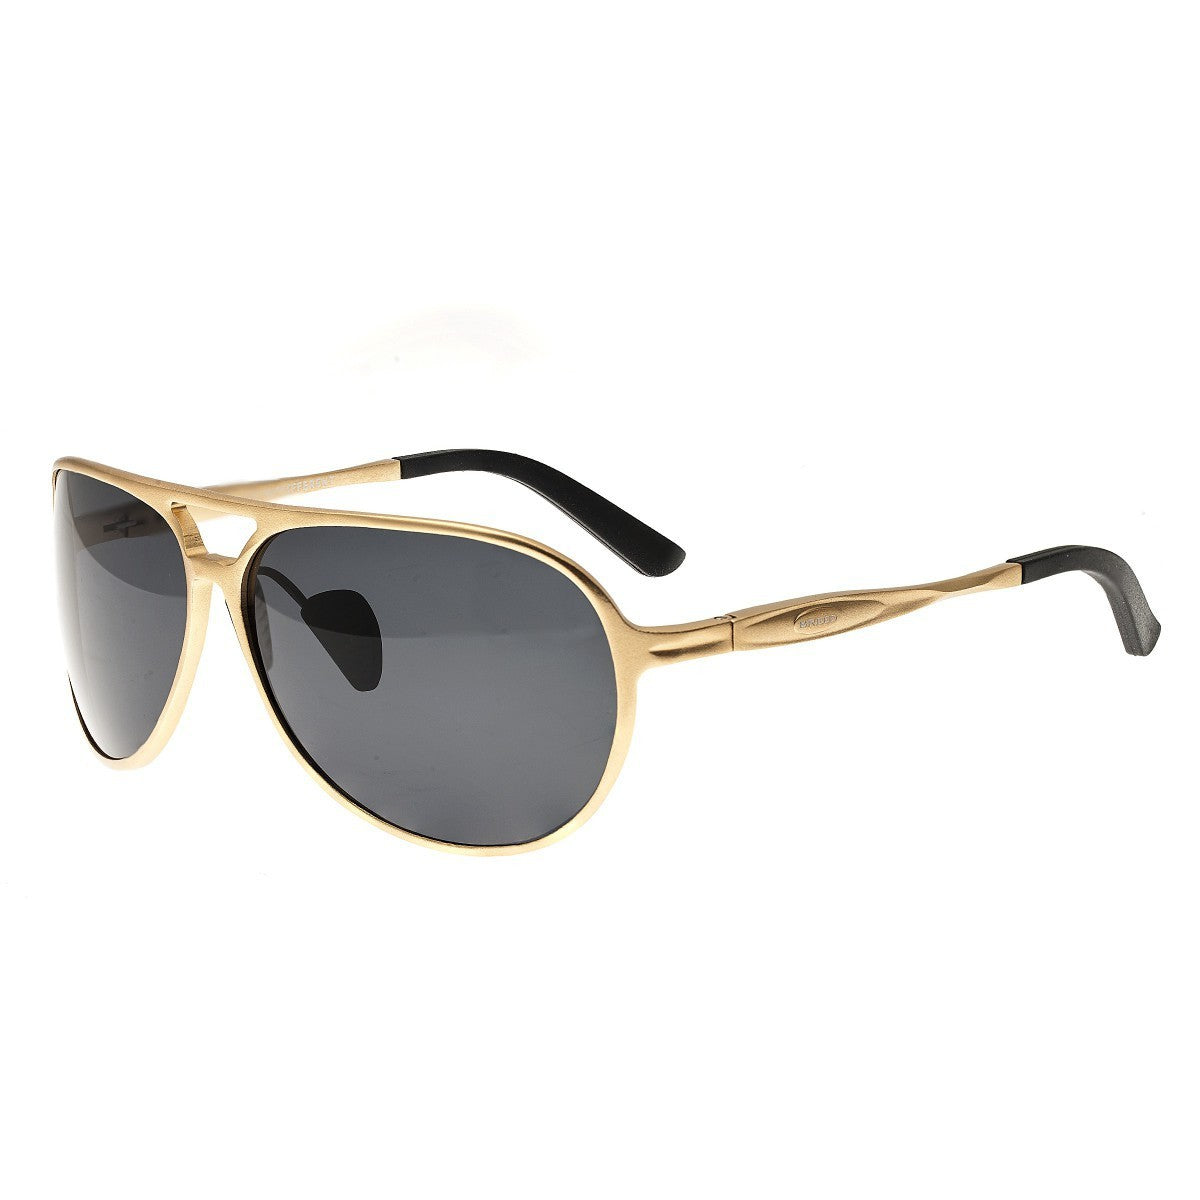 Breed Earhart Aluminium Polarized Sunglasses - Gold/Black - BSG011GD